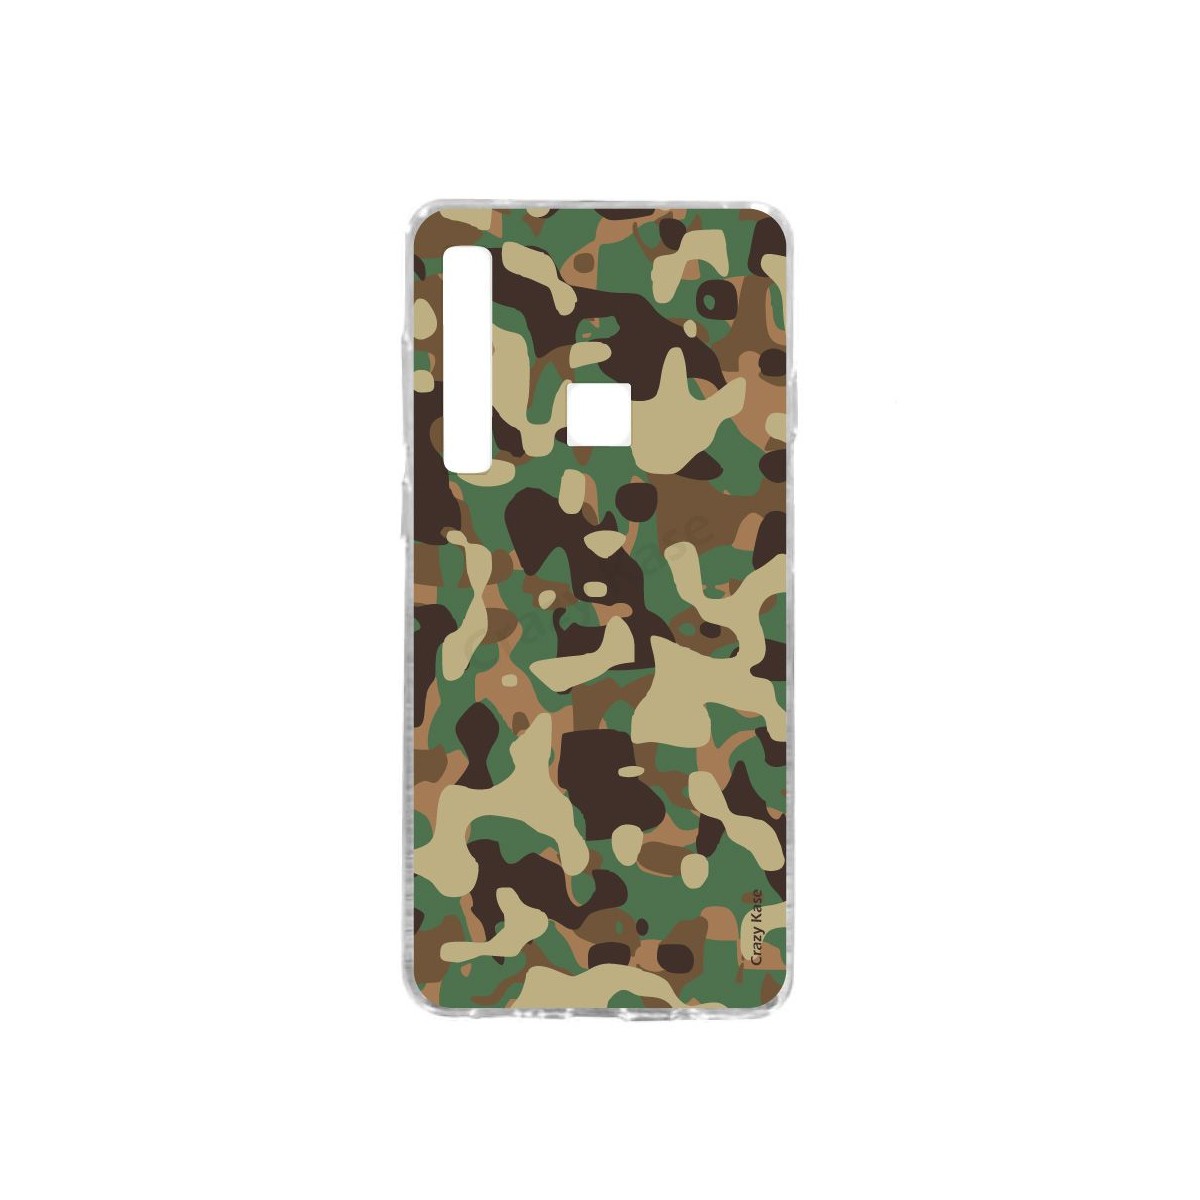 Coque compatible Galaxy A9 (2018) souple Camouflage militaire - Crazy Kase